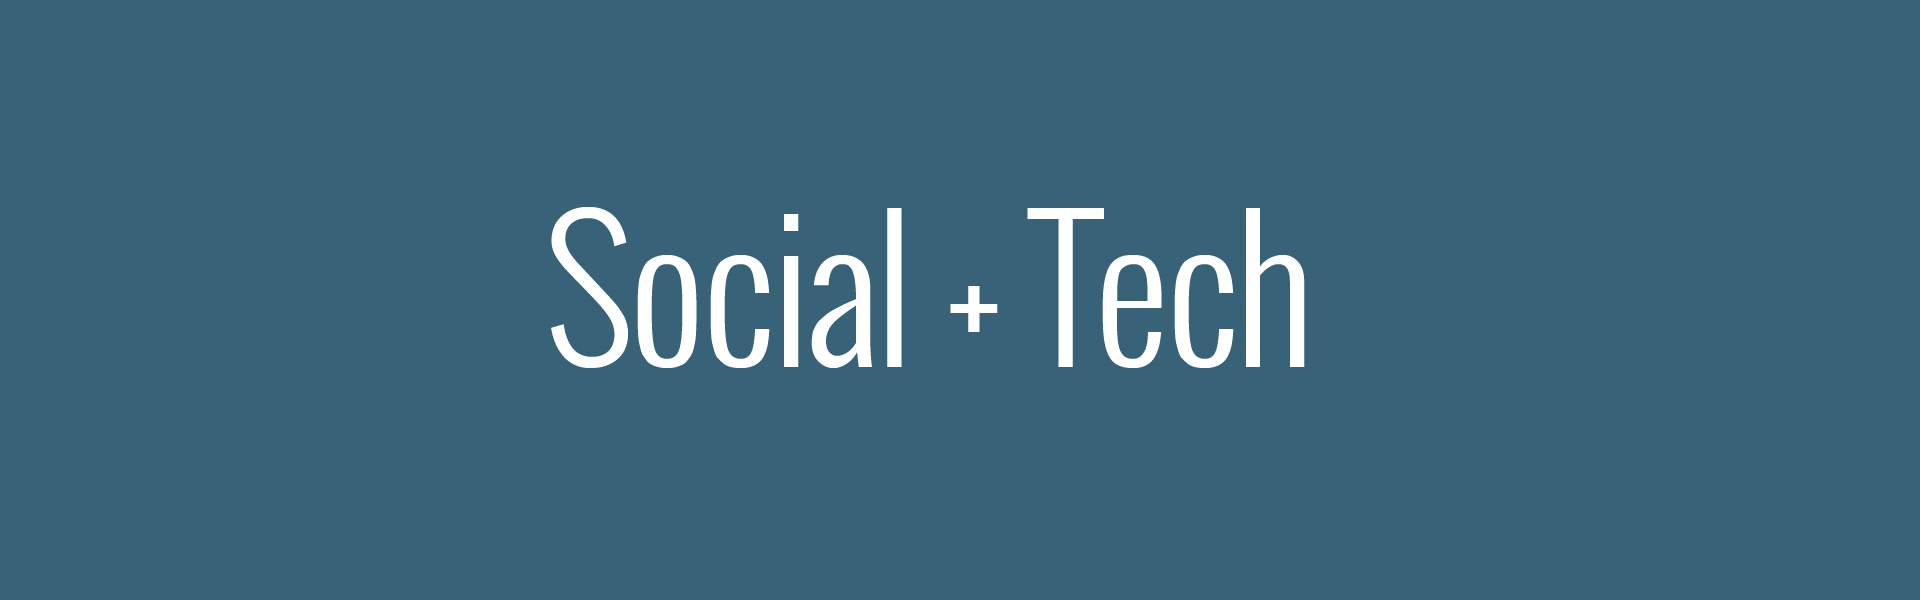 #SocialTech que serán diferentes: factores para tener en cuenta 2017-2023